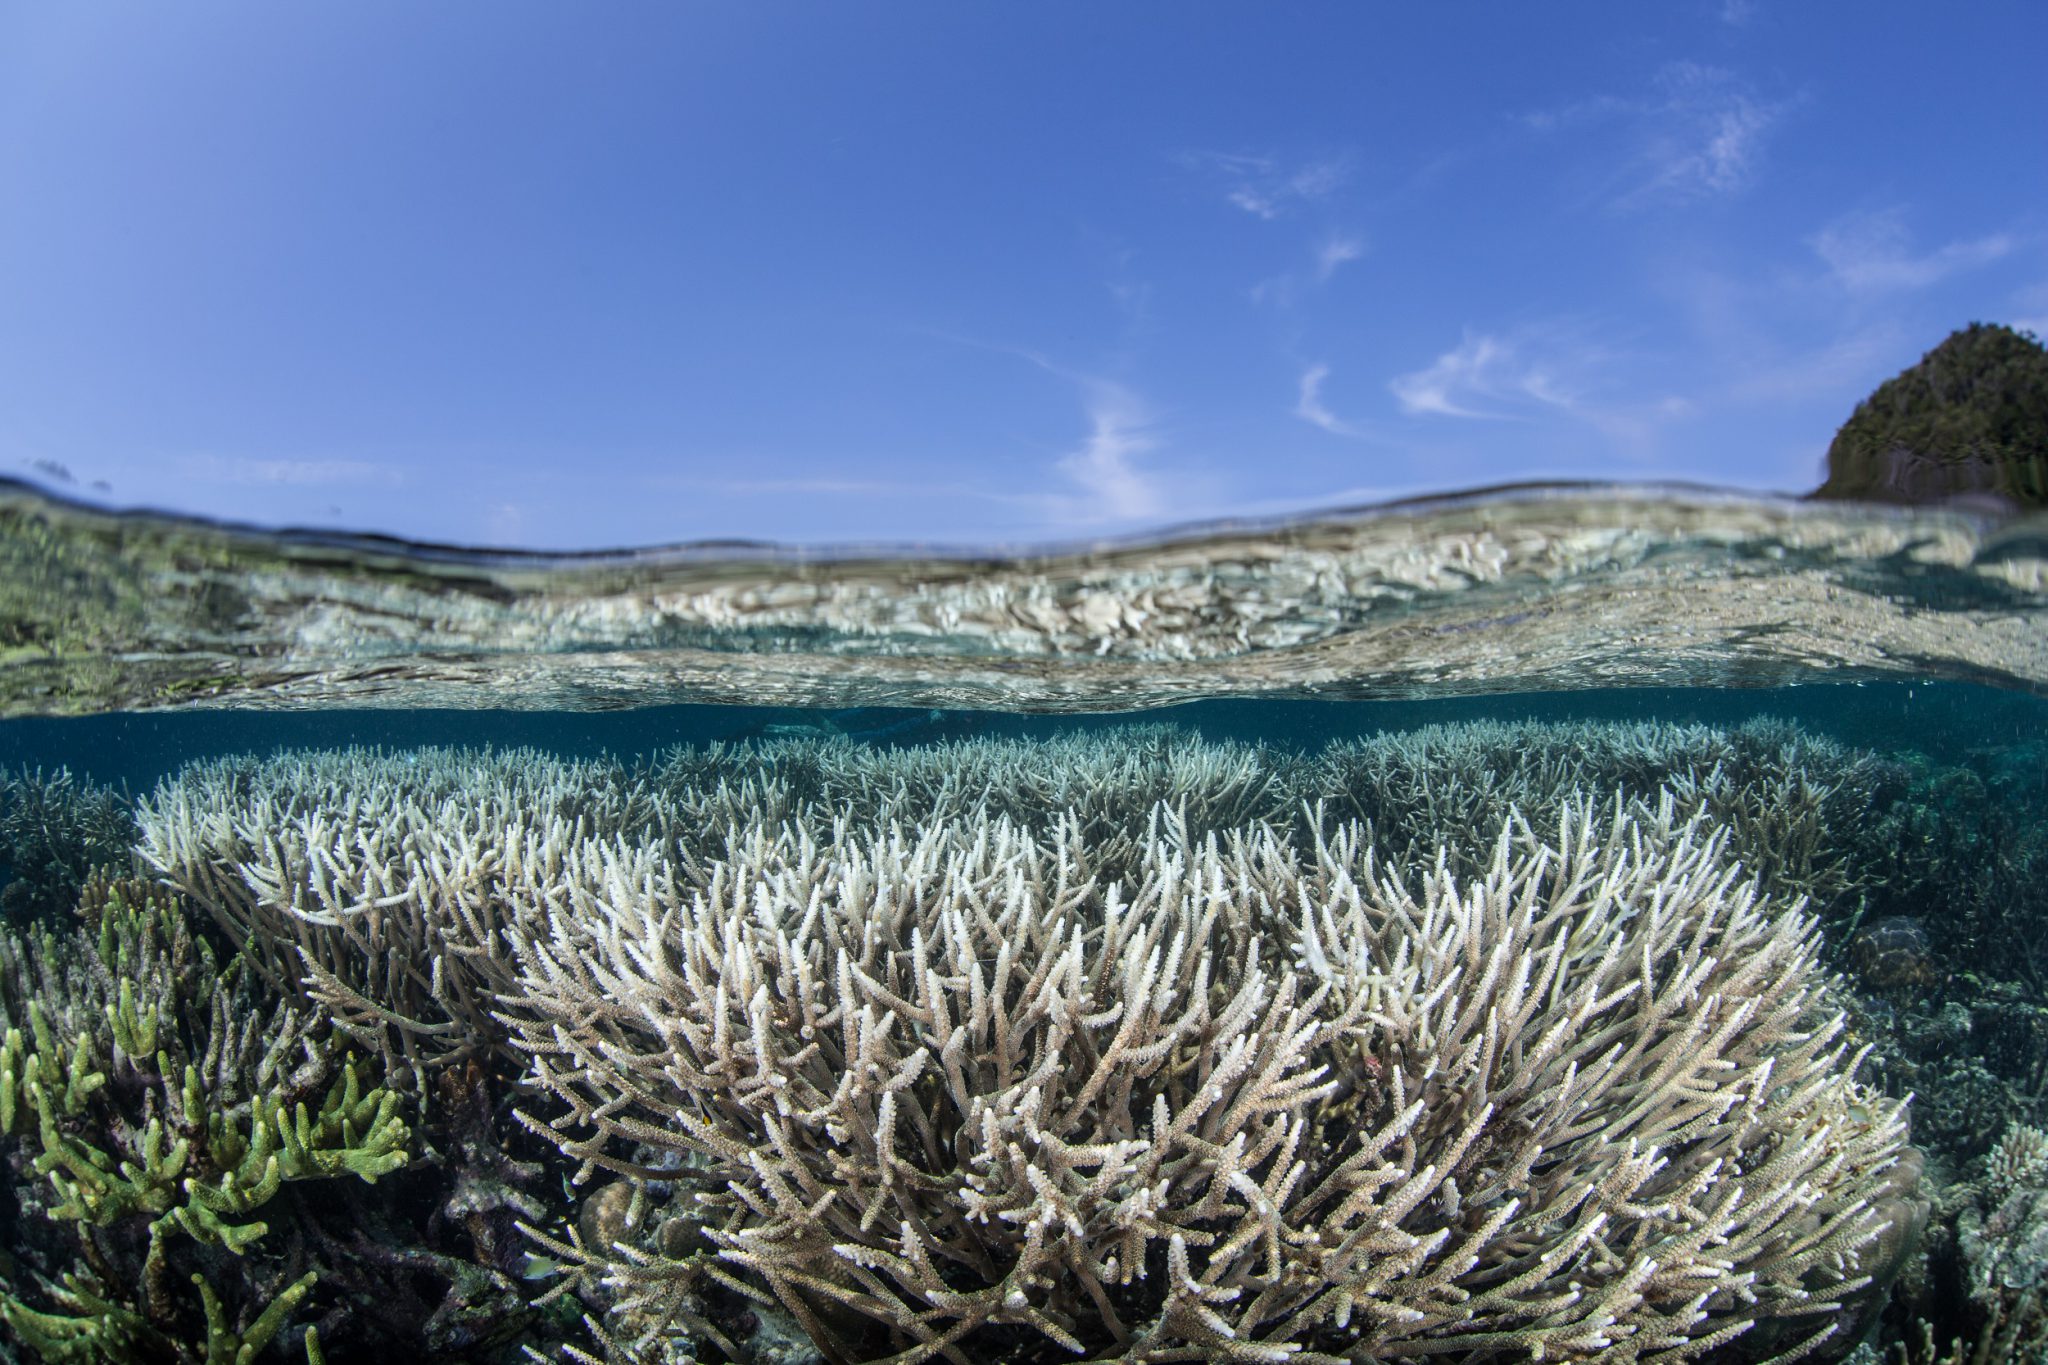 Am image of staghorn corals underwater